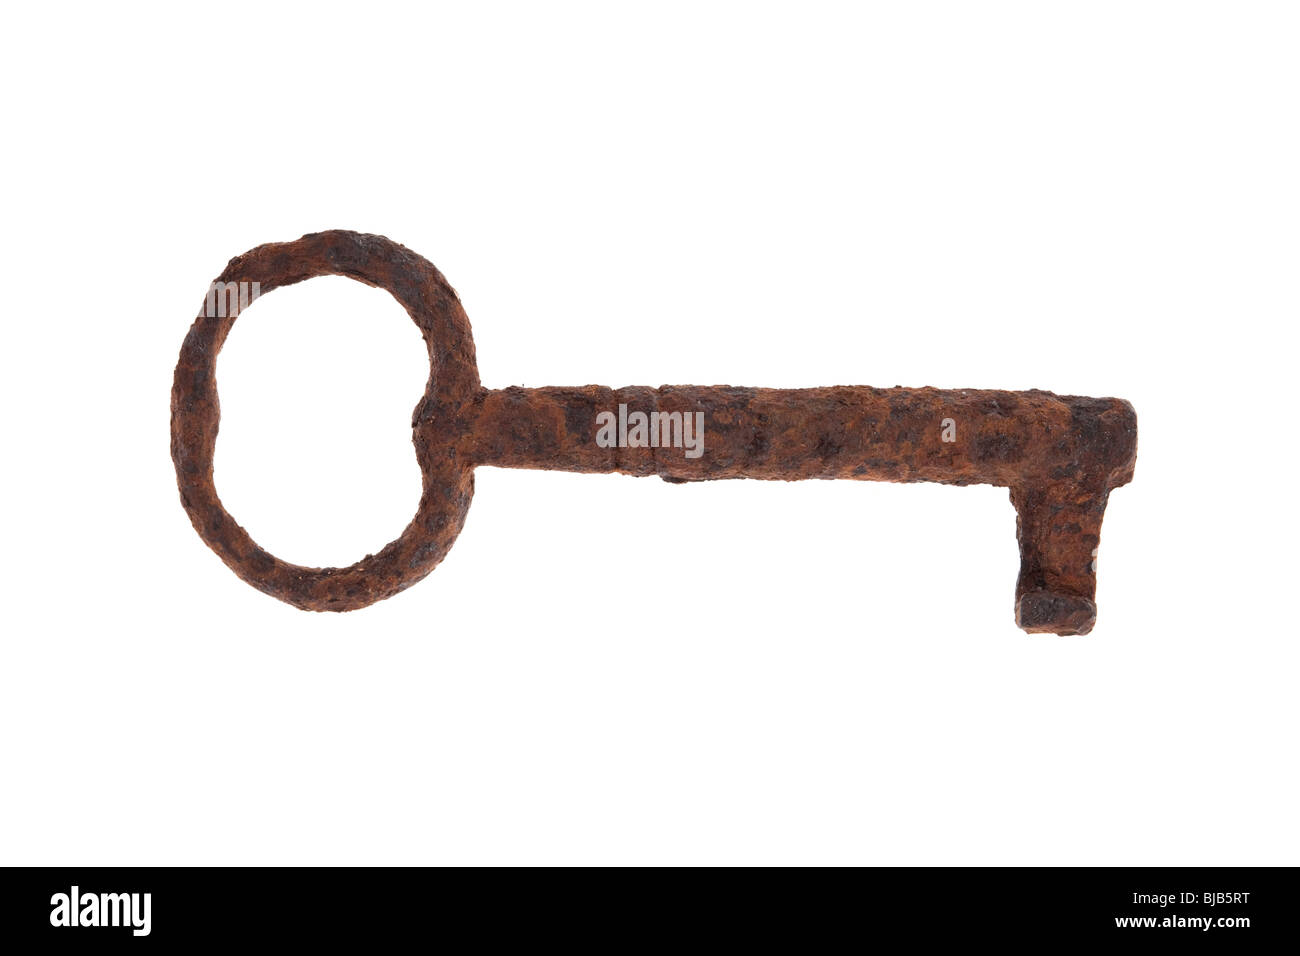 Rusty door key isolated on white background Stock Photo